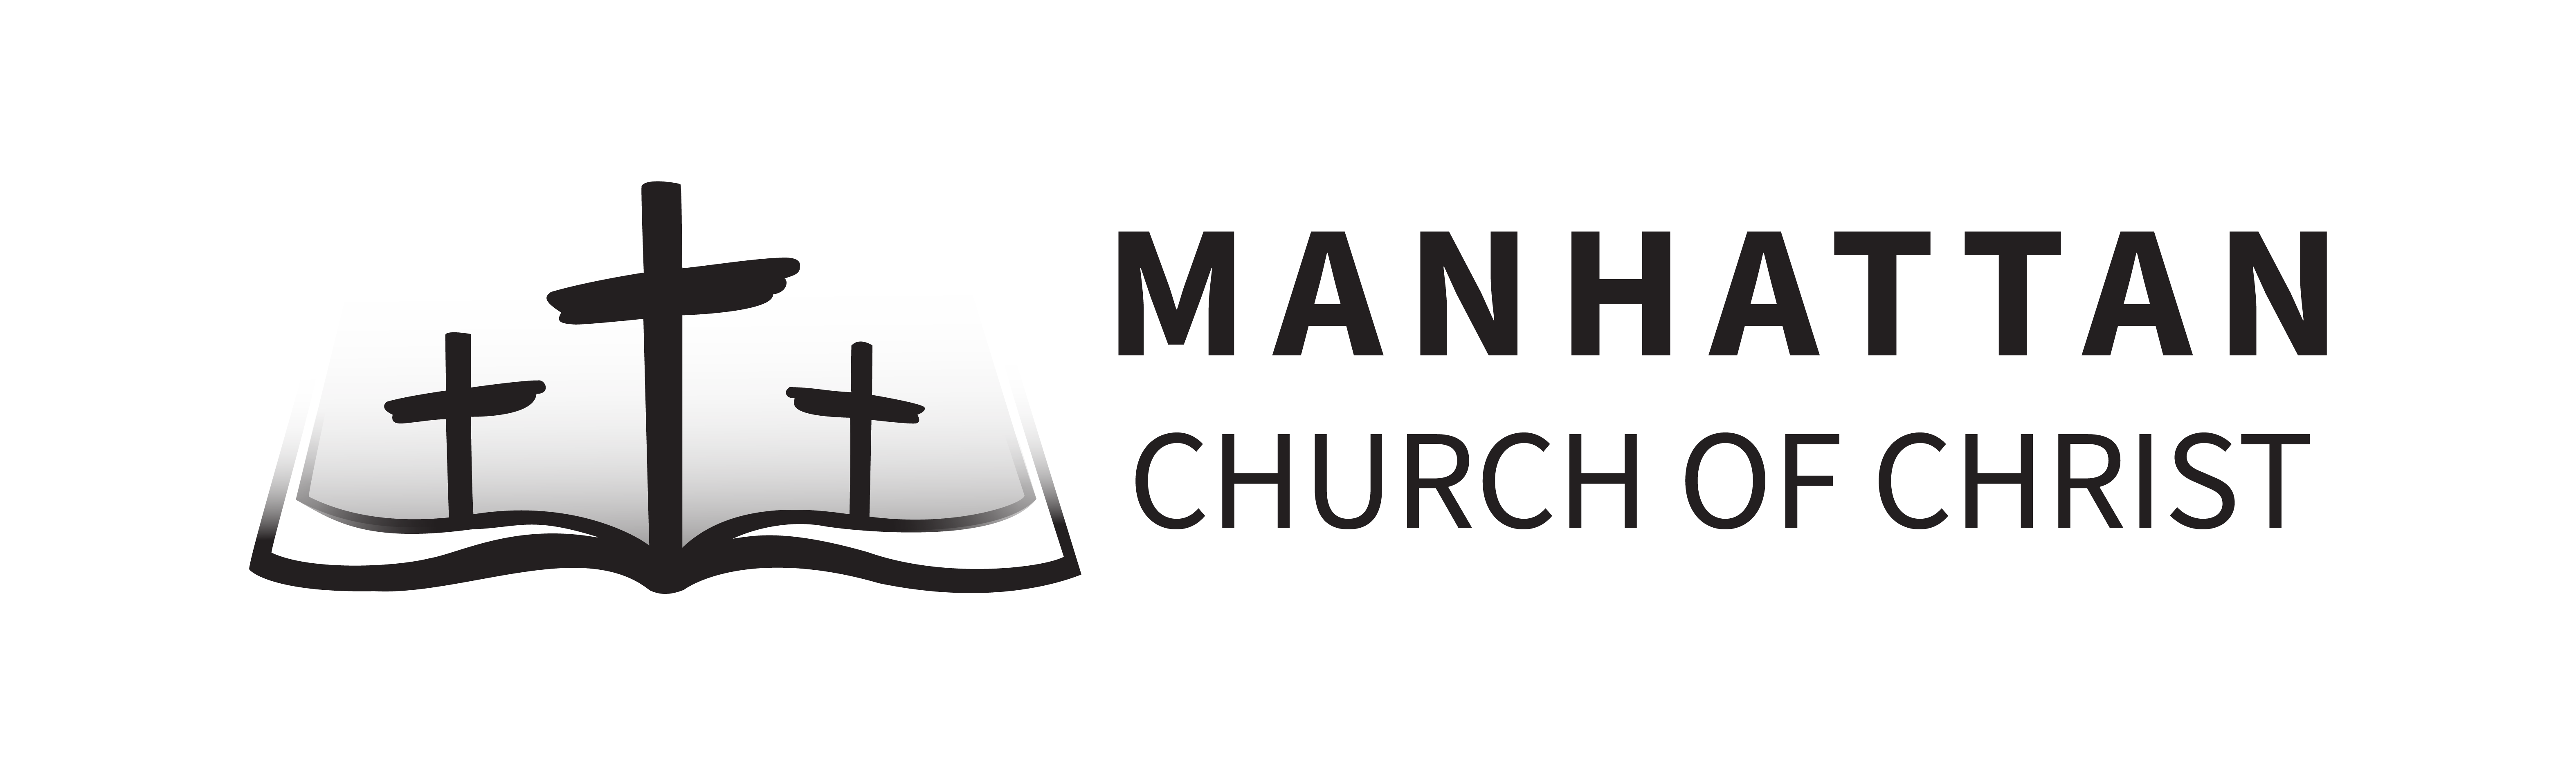 Manhattan church of Christ